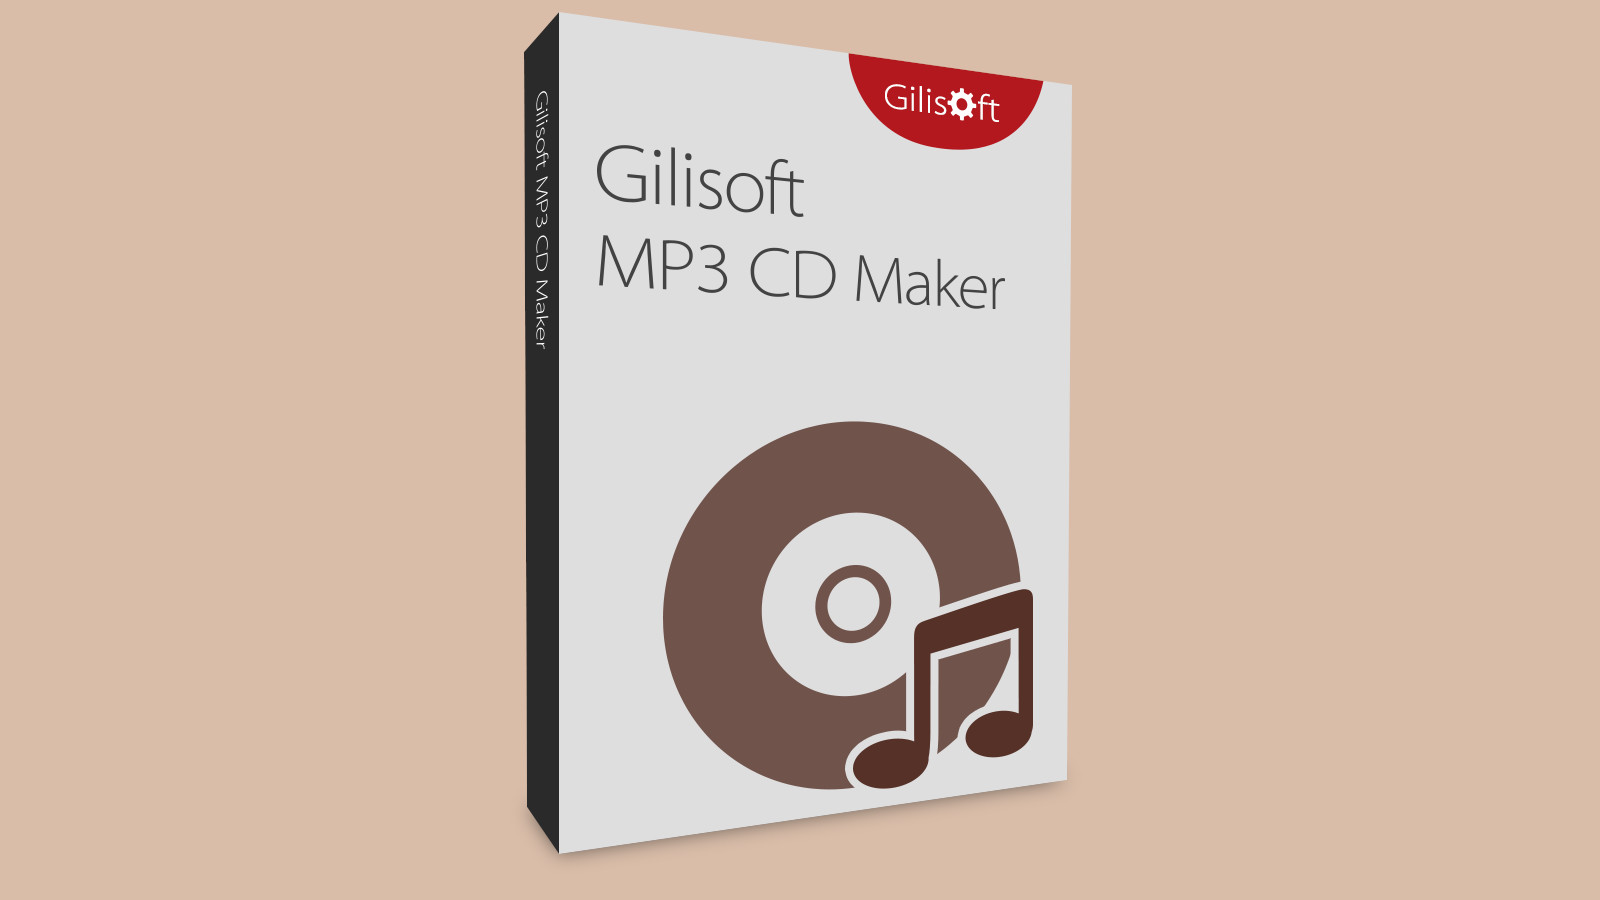 Gilisoft MP3 CD Maker CD Key 5.65 usd